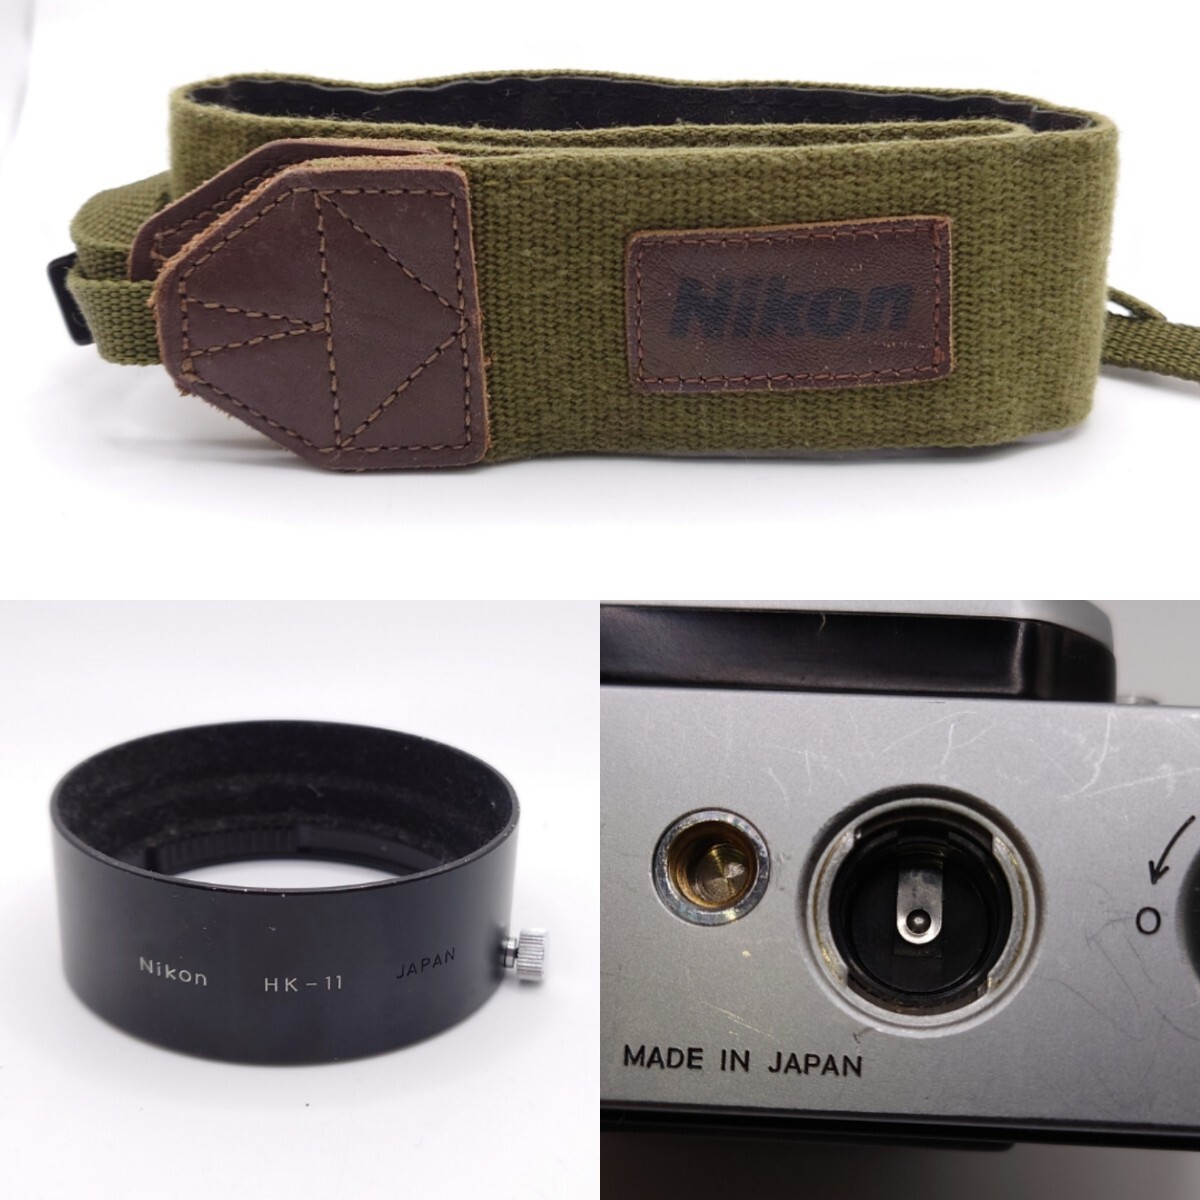 【R1-428】 Nikon F2 フォトミック シルバー ボディ フィルム 一眼レフ カメラZOOM NIKKOR 35-105mm 1:3.5-4.5 シャッター動作OK_画像8